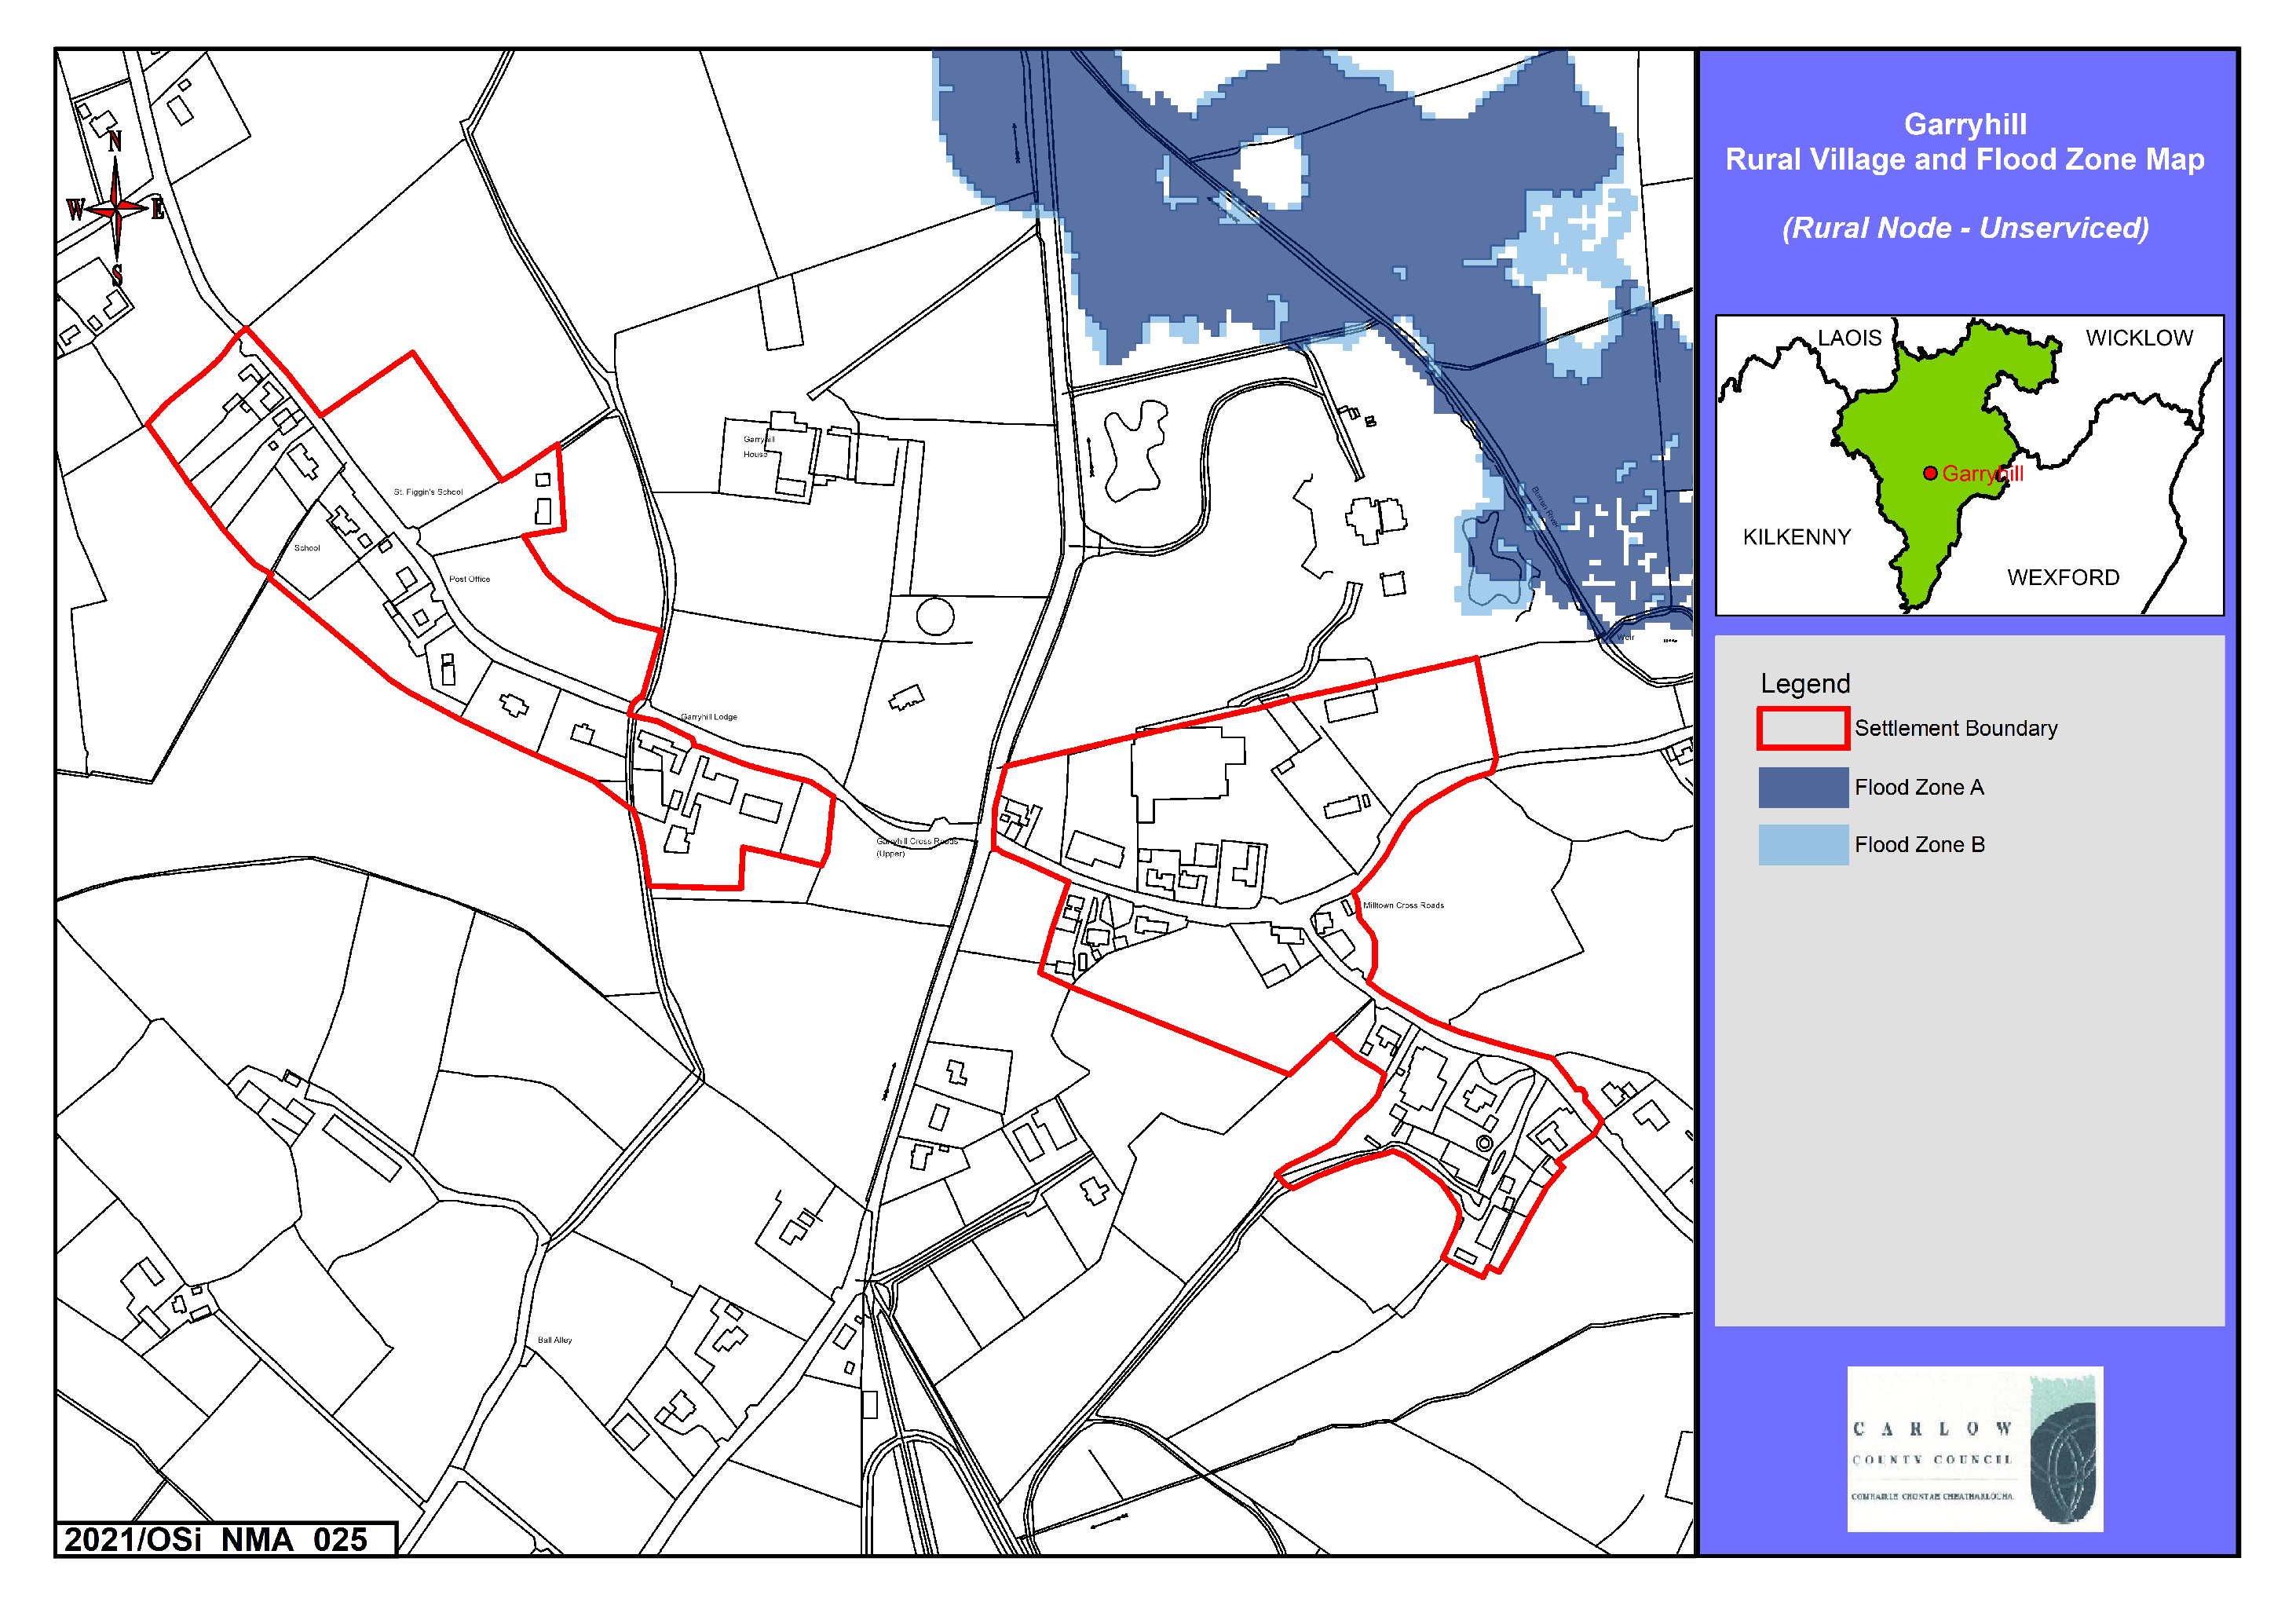 Garyhill Rural Village and Flood Zone Map